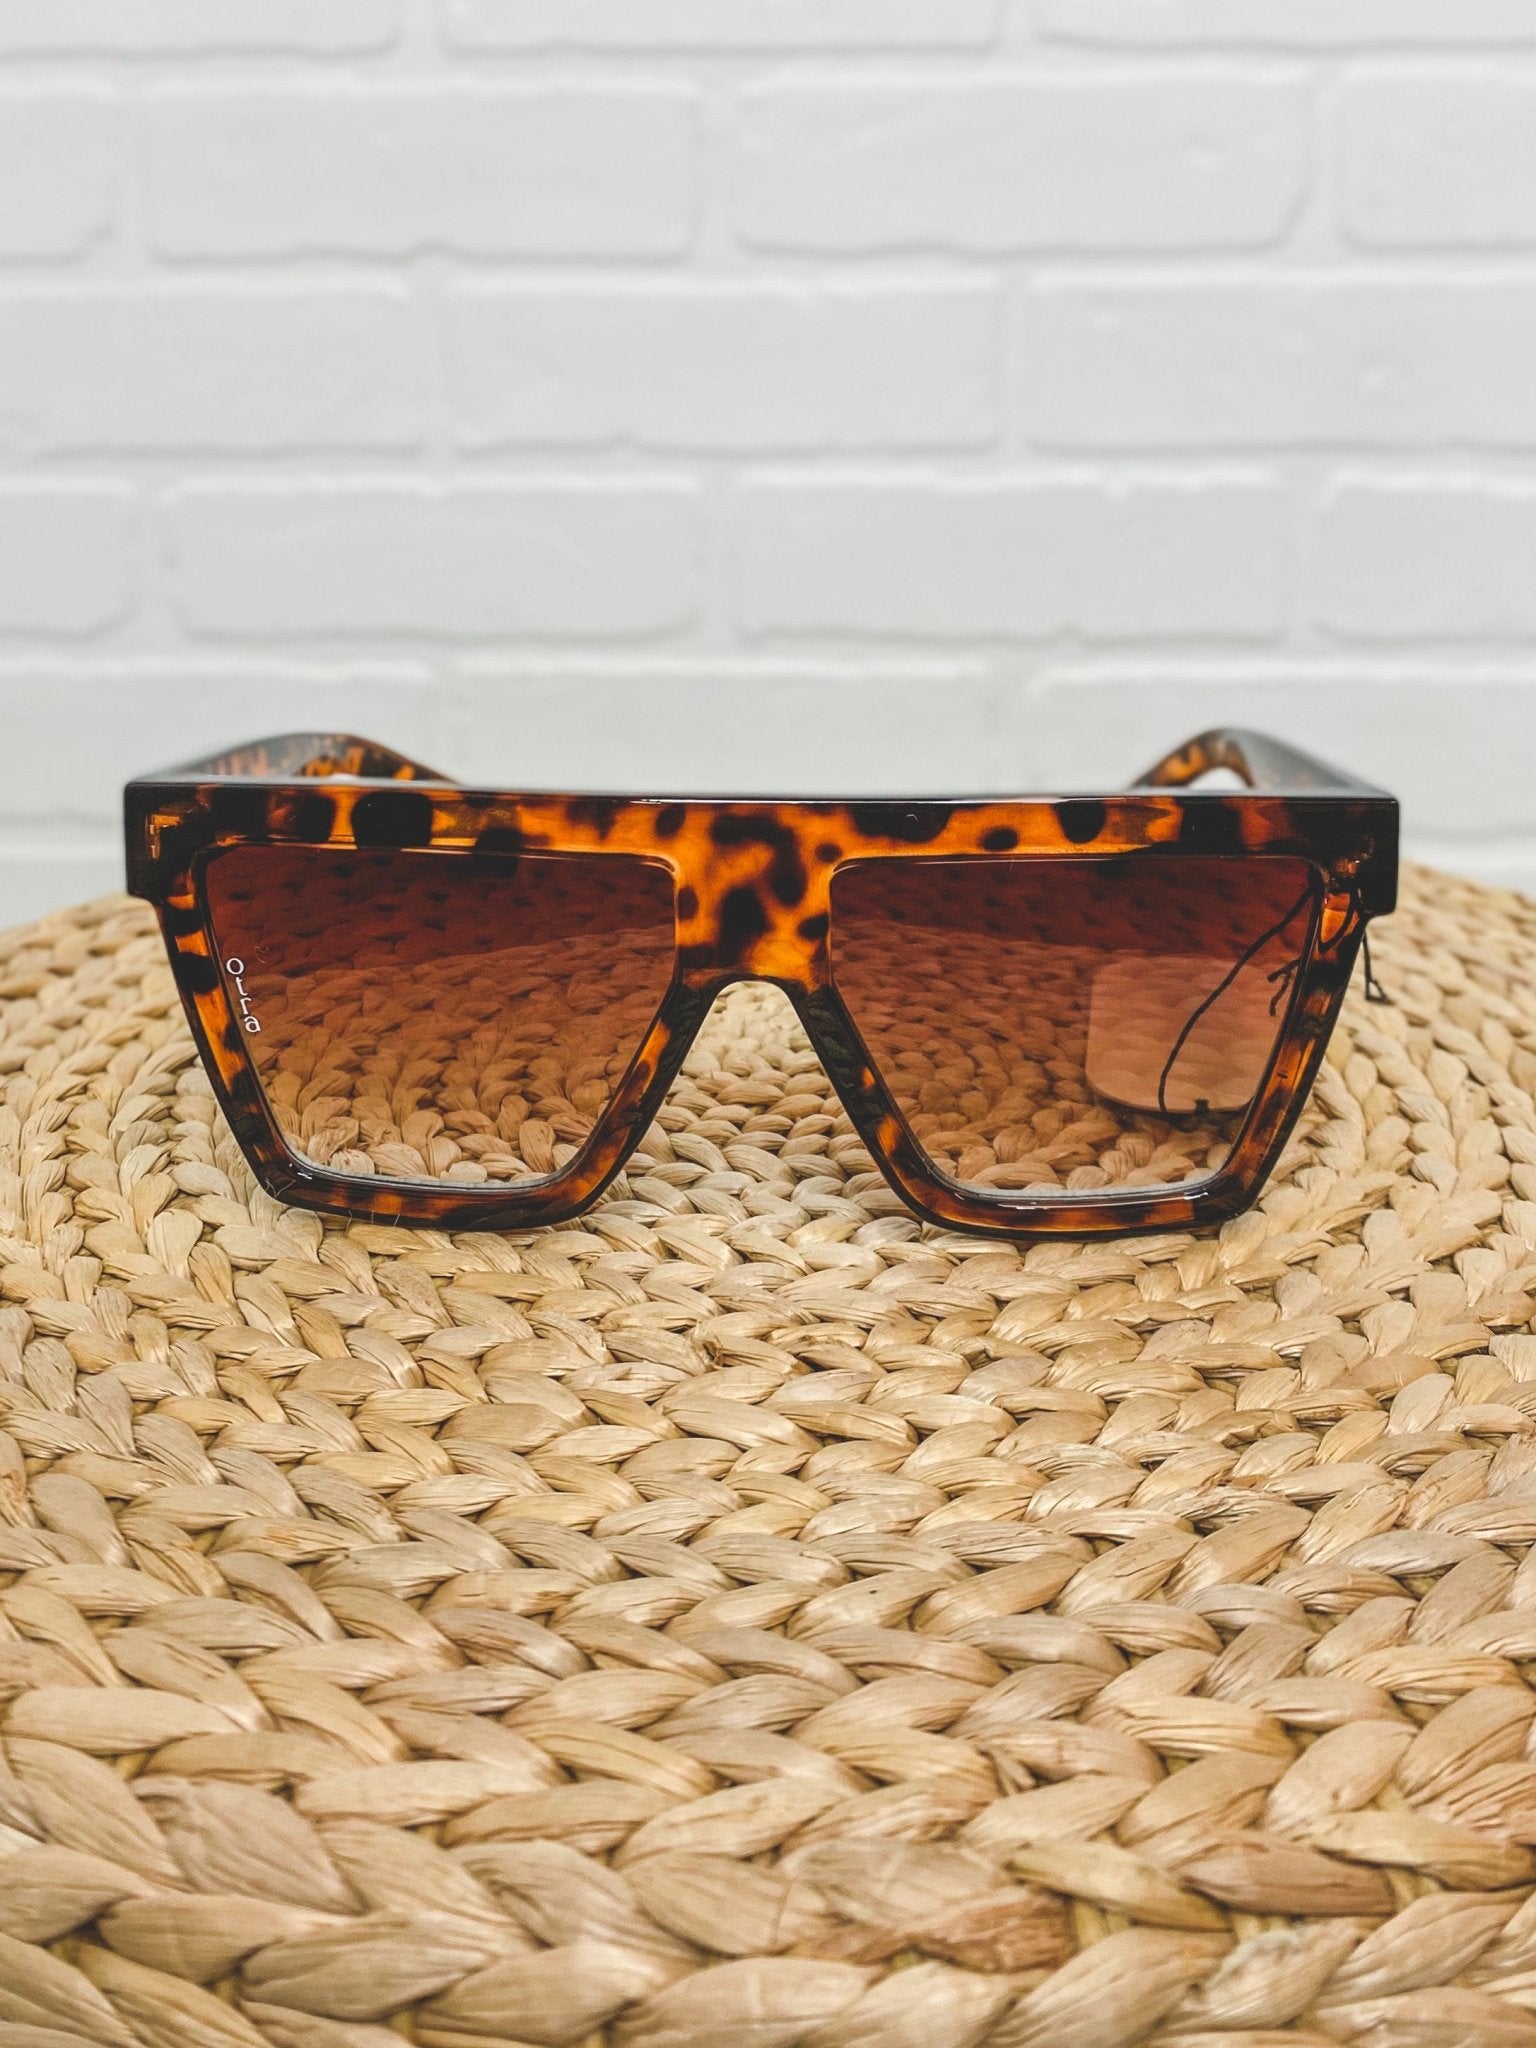 Otra Rae sunglasses tortoiseshell - Cute Sunglasses - Trendy Glasses at Lush Fashion Lounge Boutique in Oklahoma